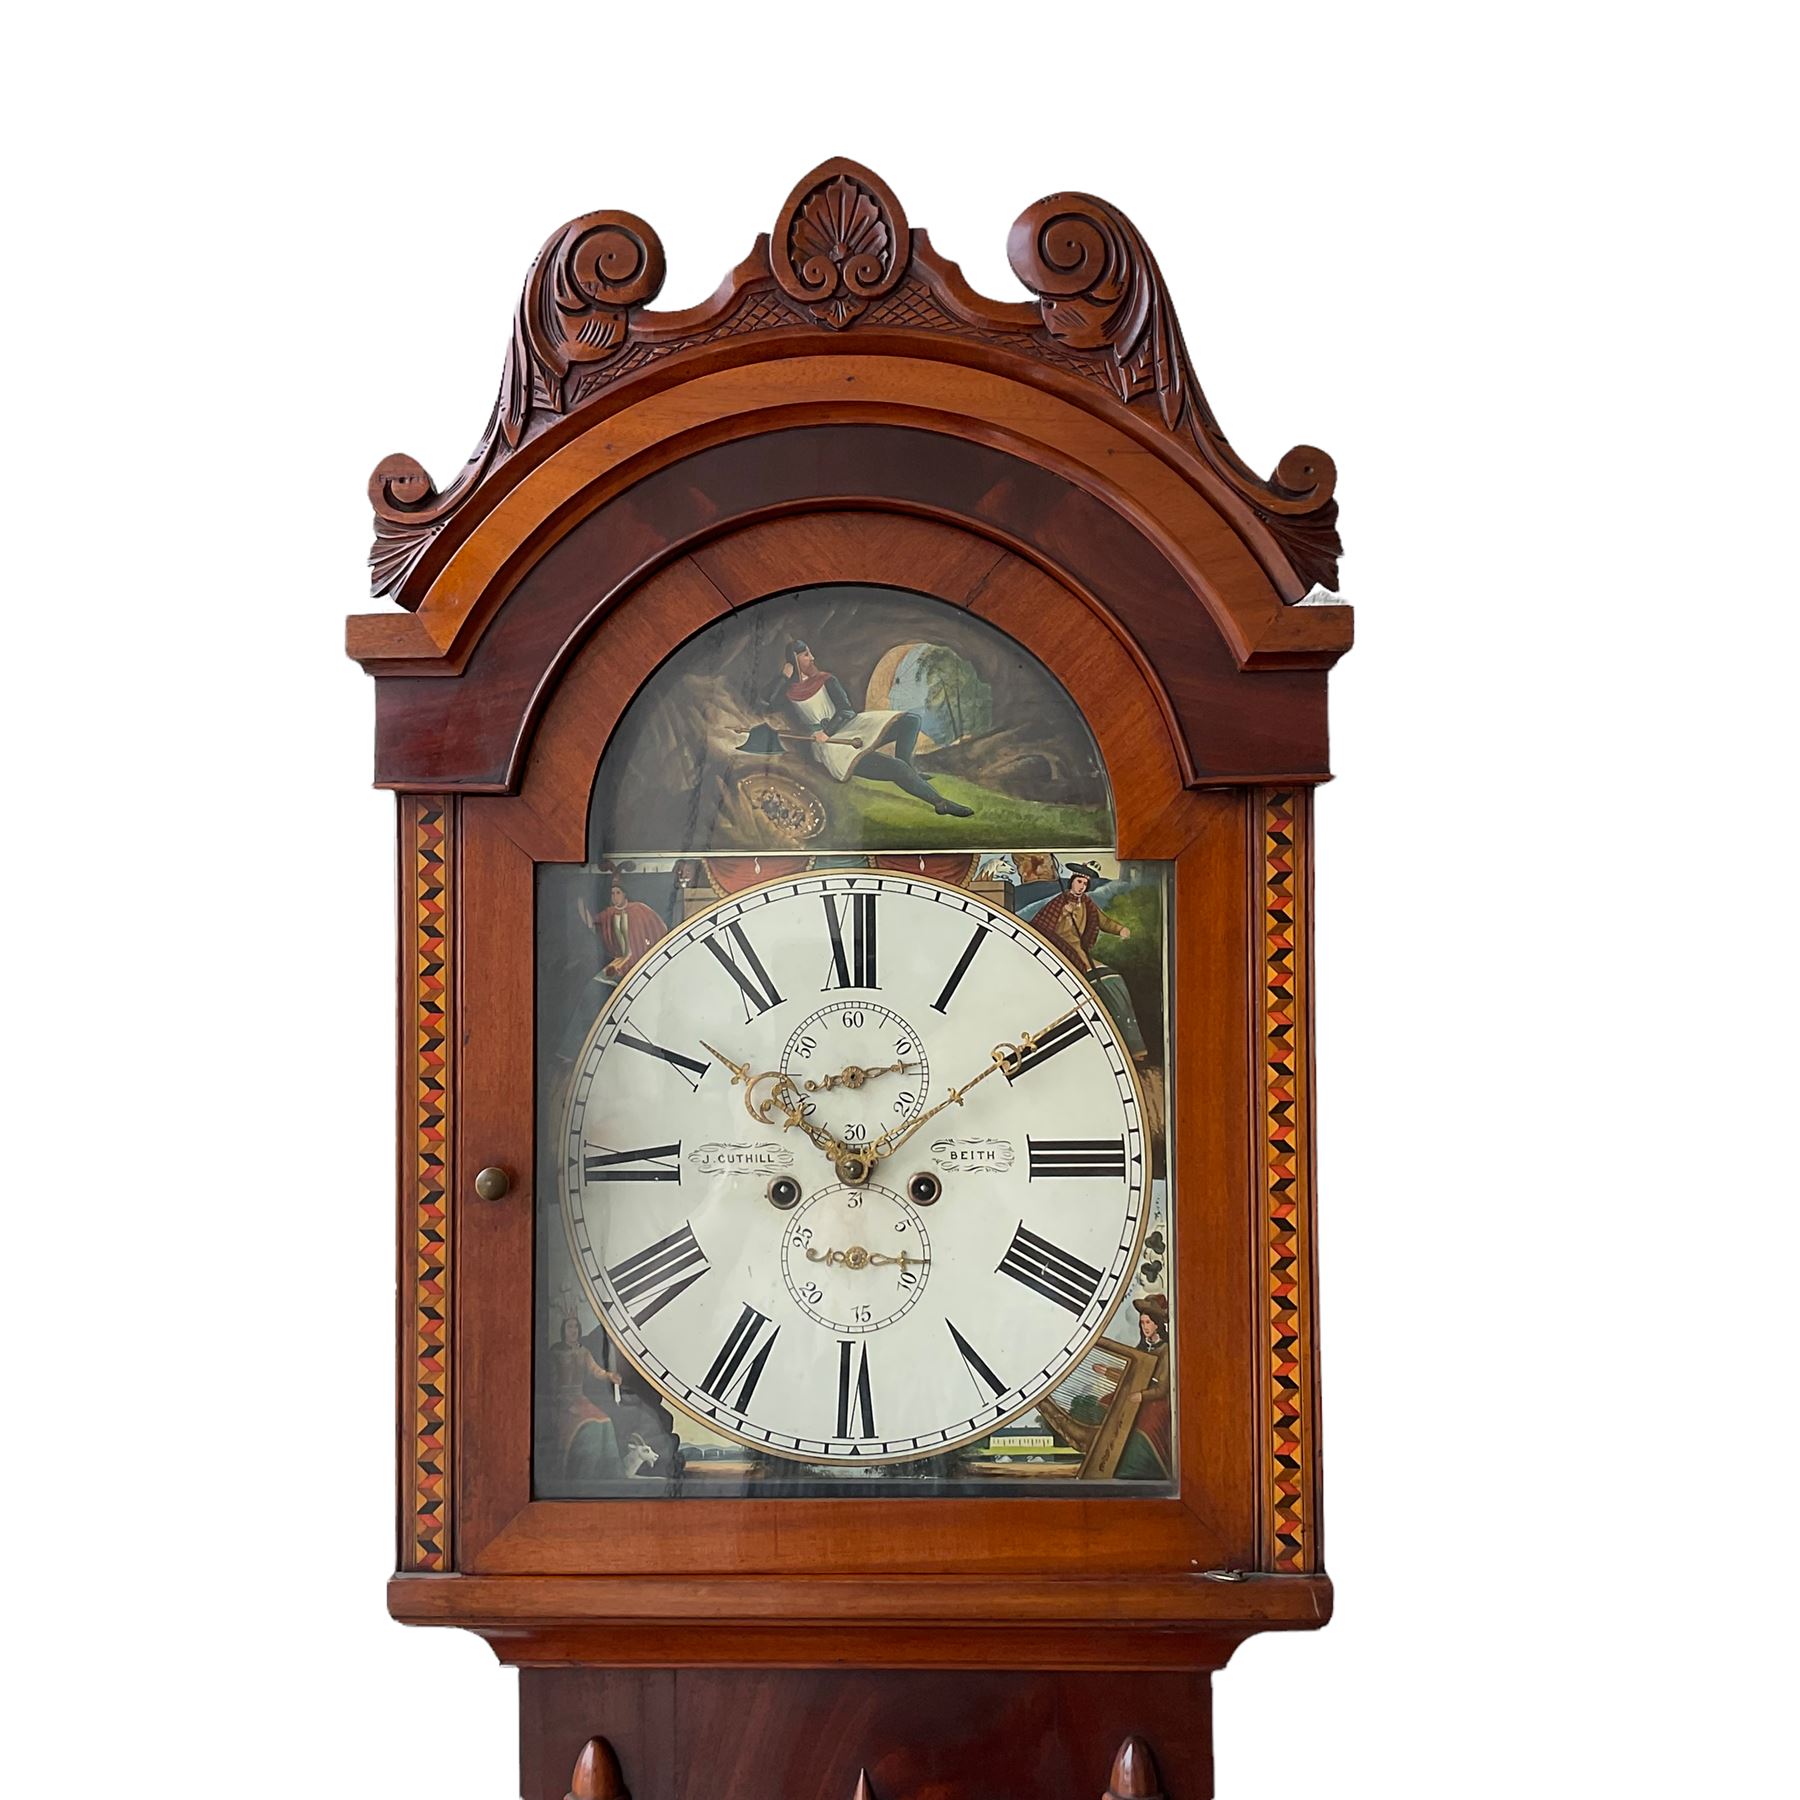 A Scottish longcase clock c 1890 in a contrasting light and dark mahogany veneered case - Image 4 of 4